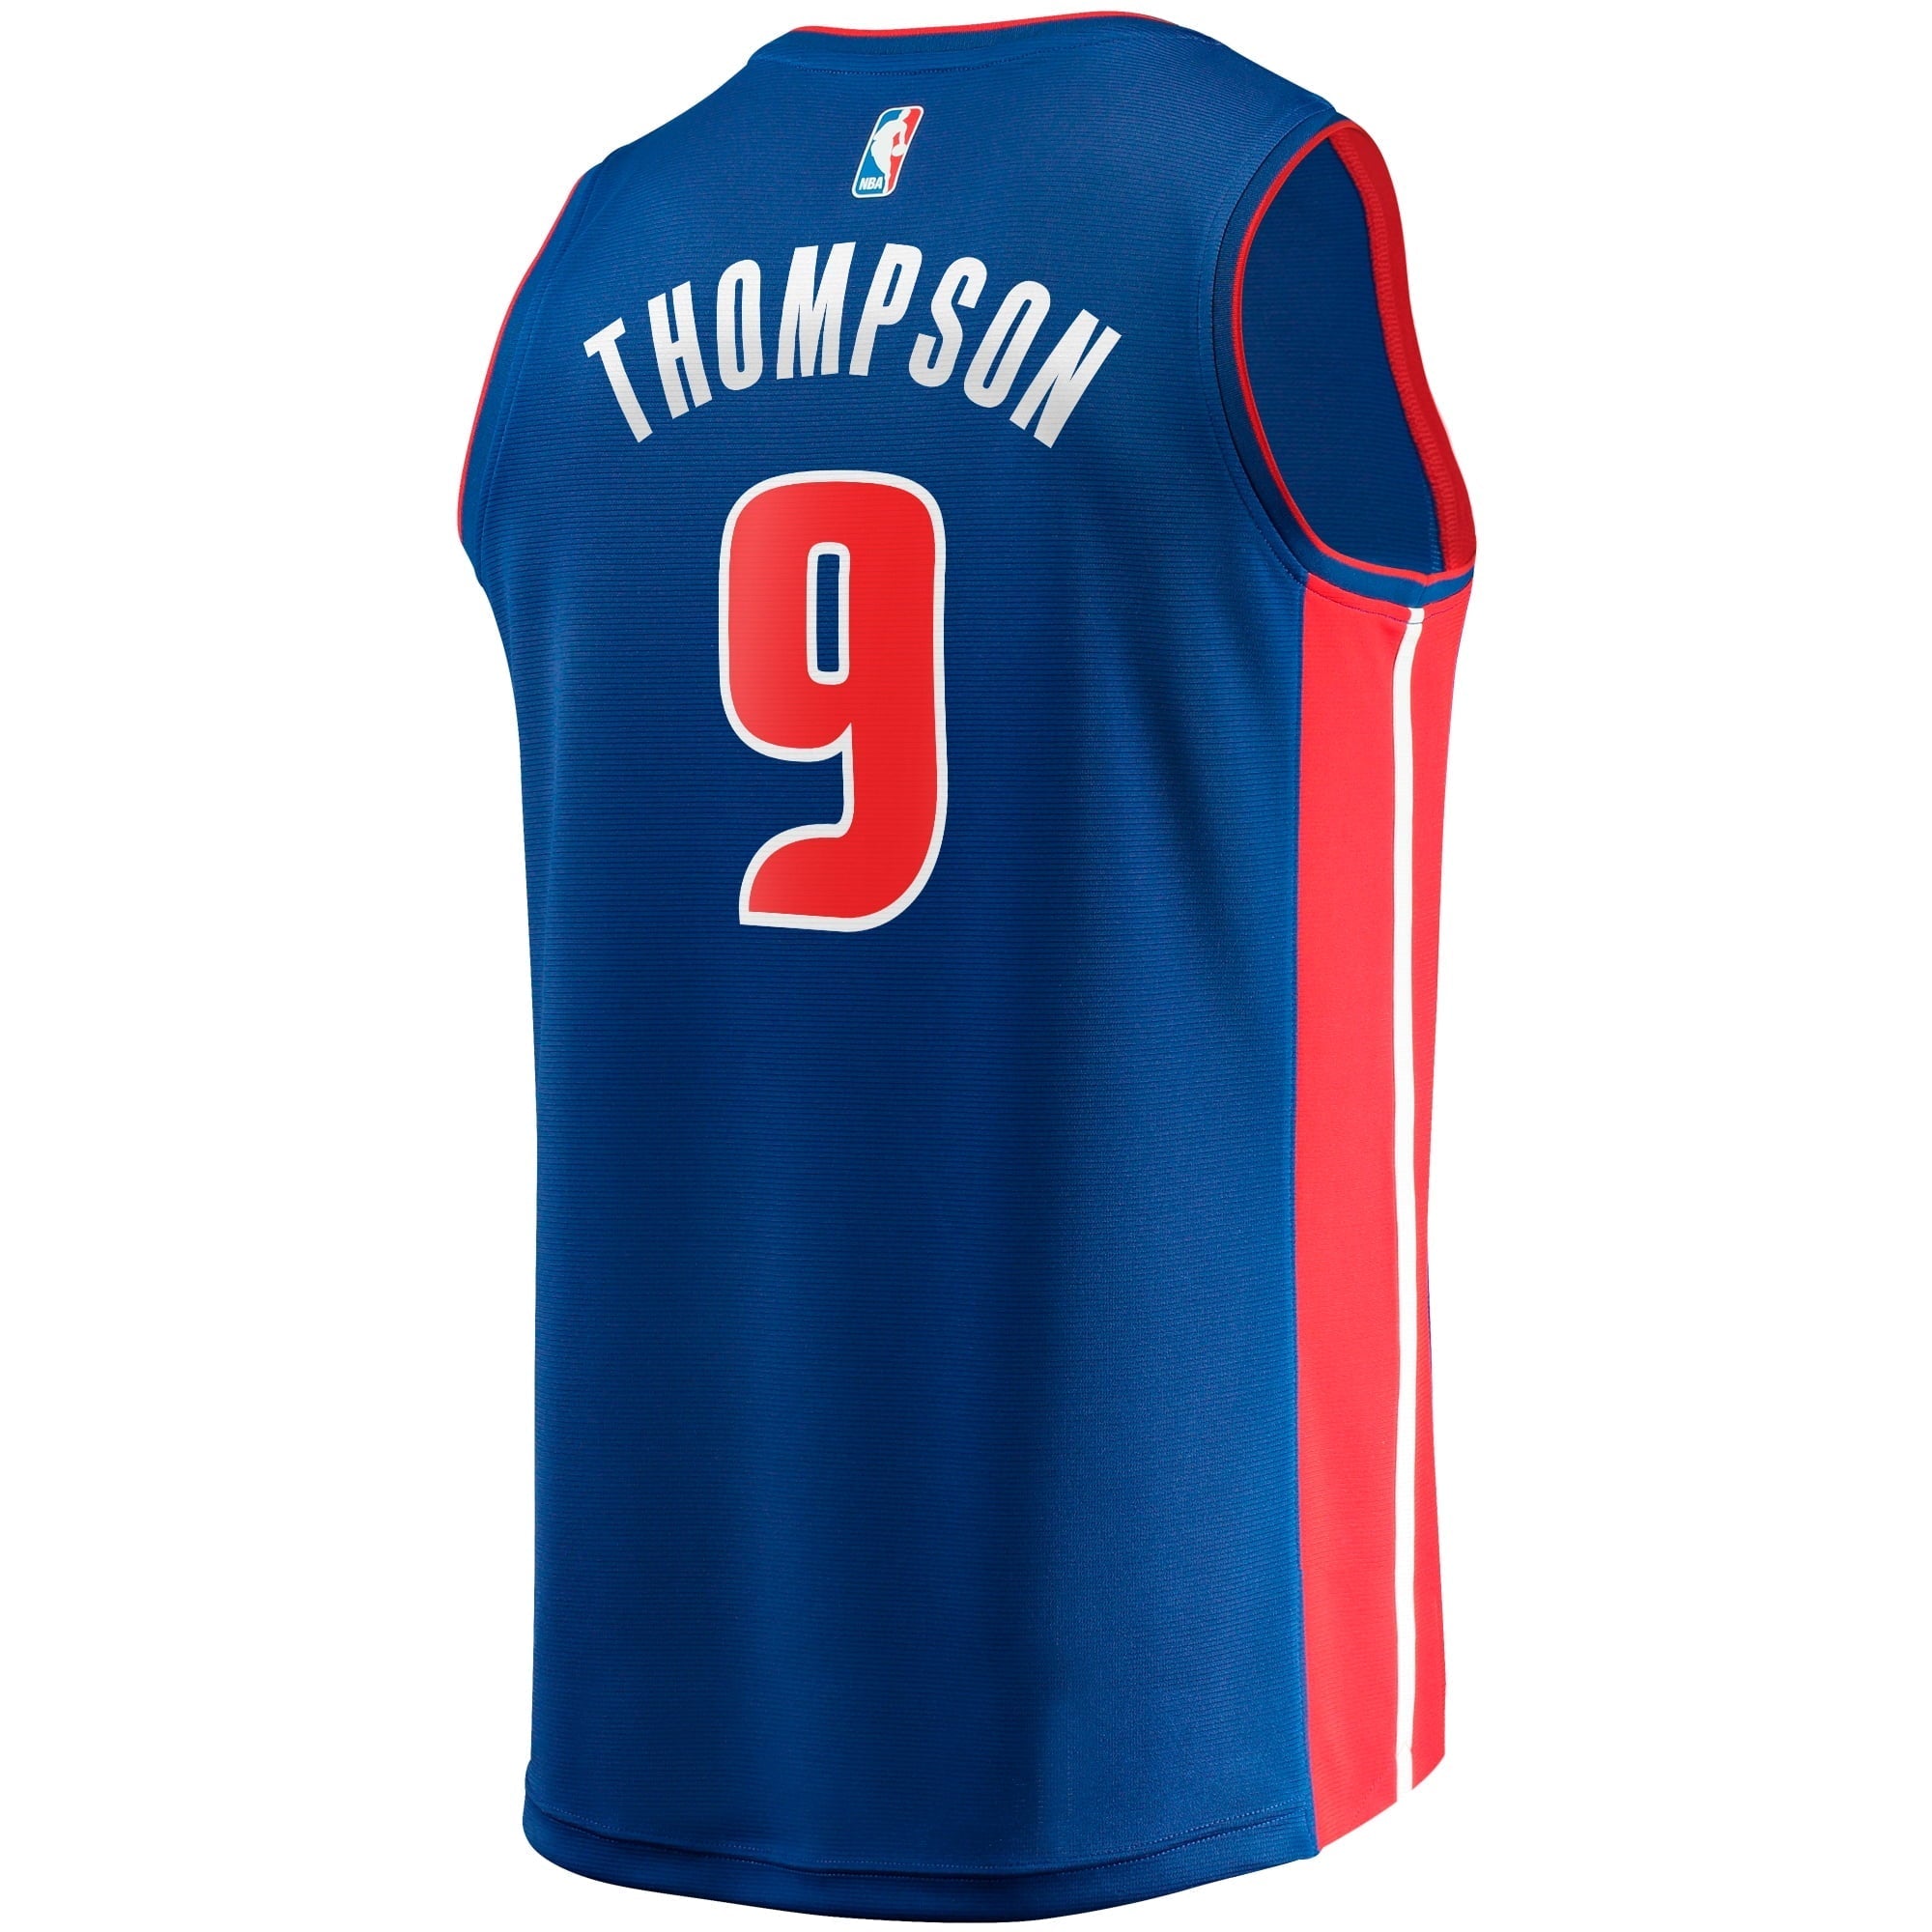 Detroit Pistons replica jersey